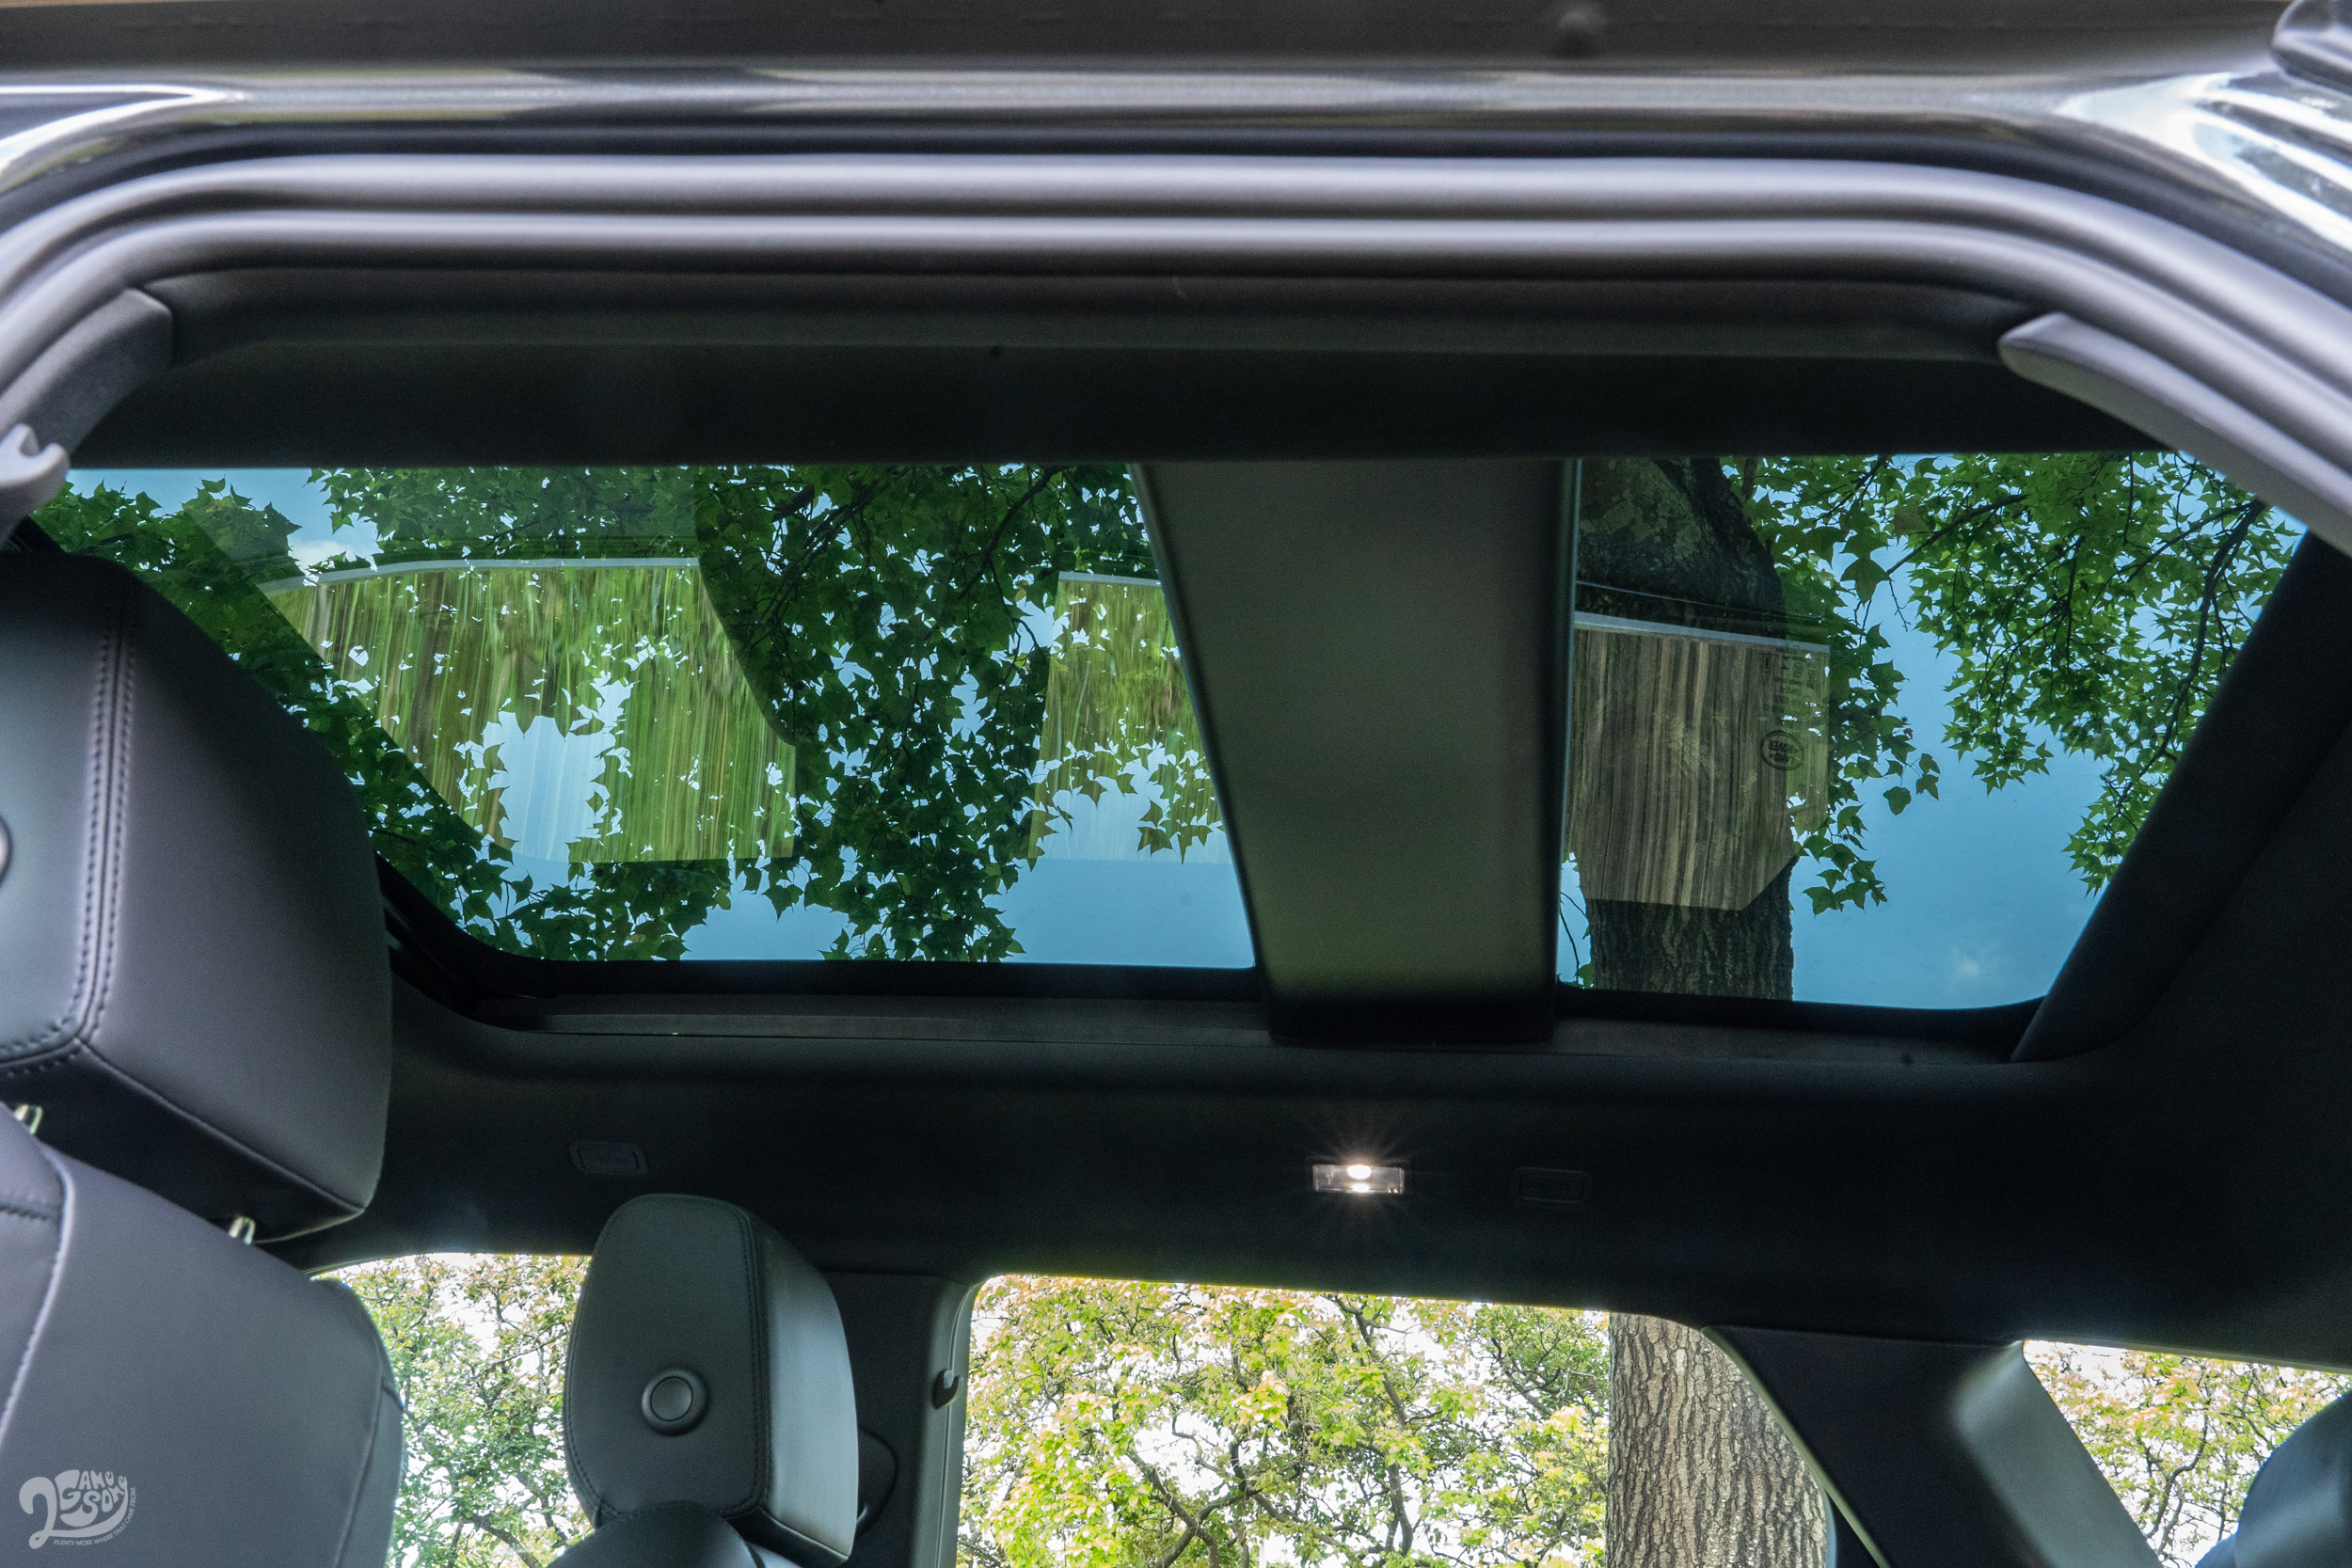 Bronze Collection 車型配備全景是電動玻璃開啟全景天窗，其餘 Range Rover Evoque 車型則為固定式全景天窗。